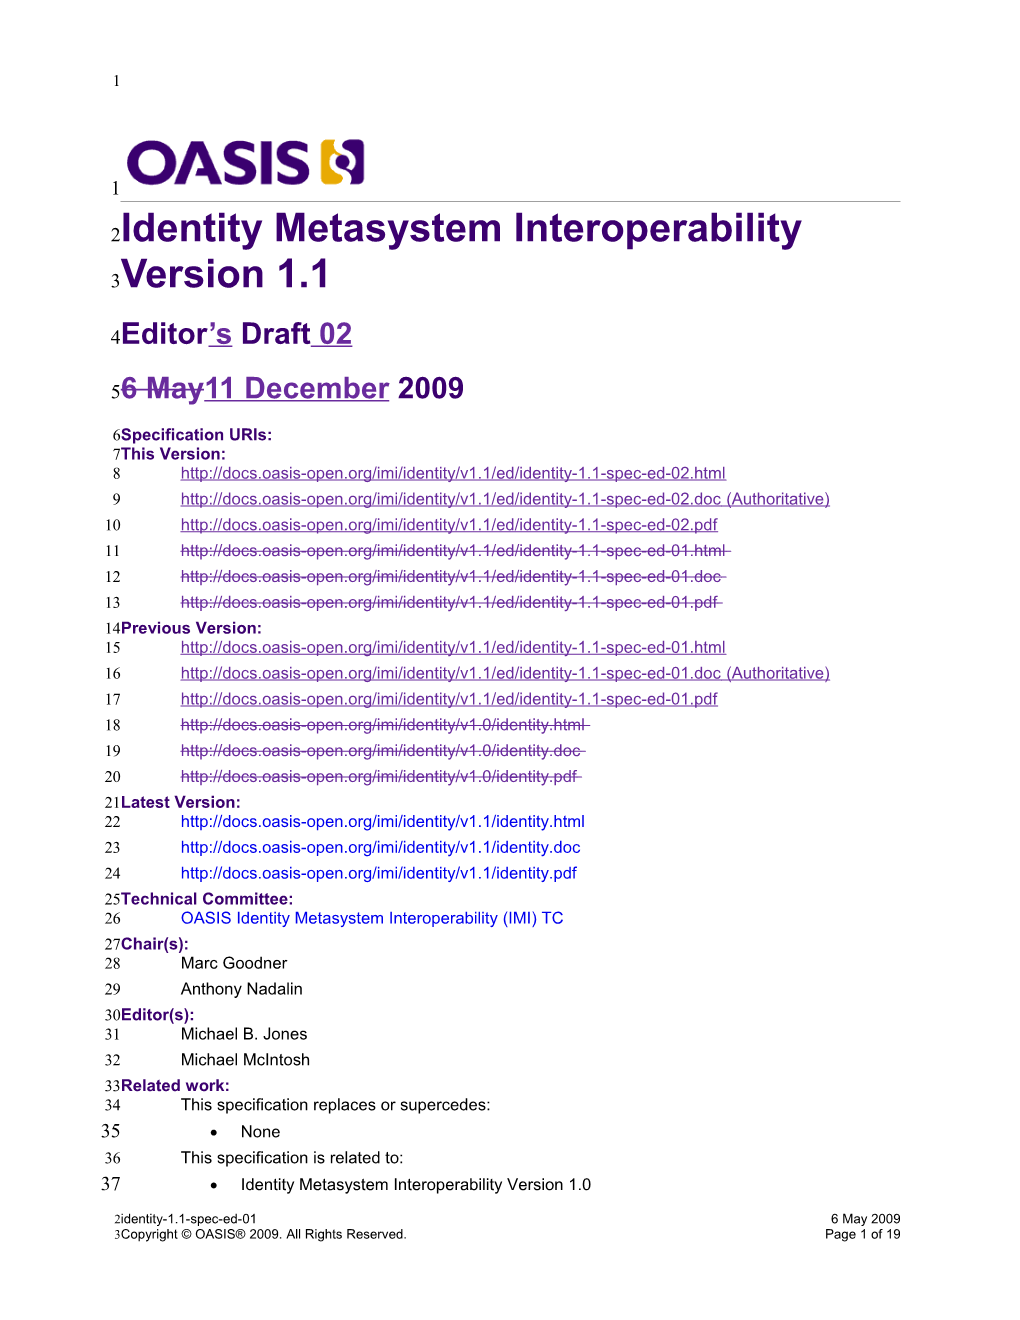 OASIS Identity Metasystem Interoperability 1.1